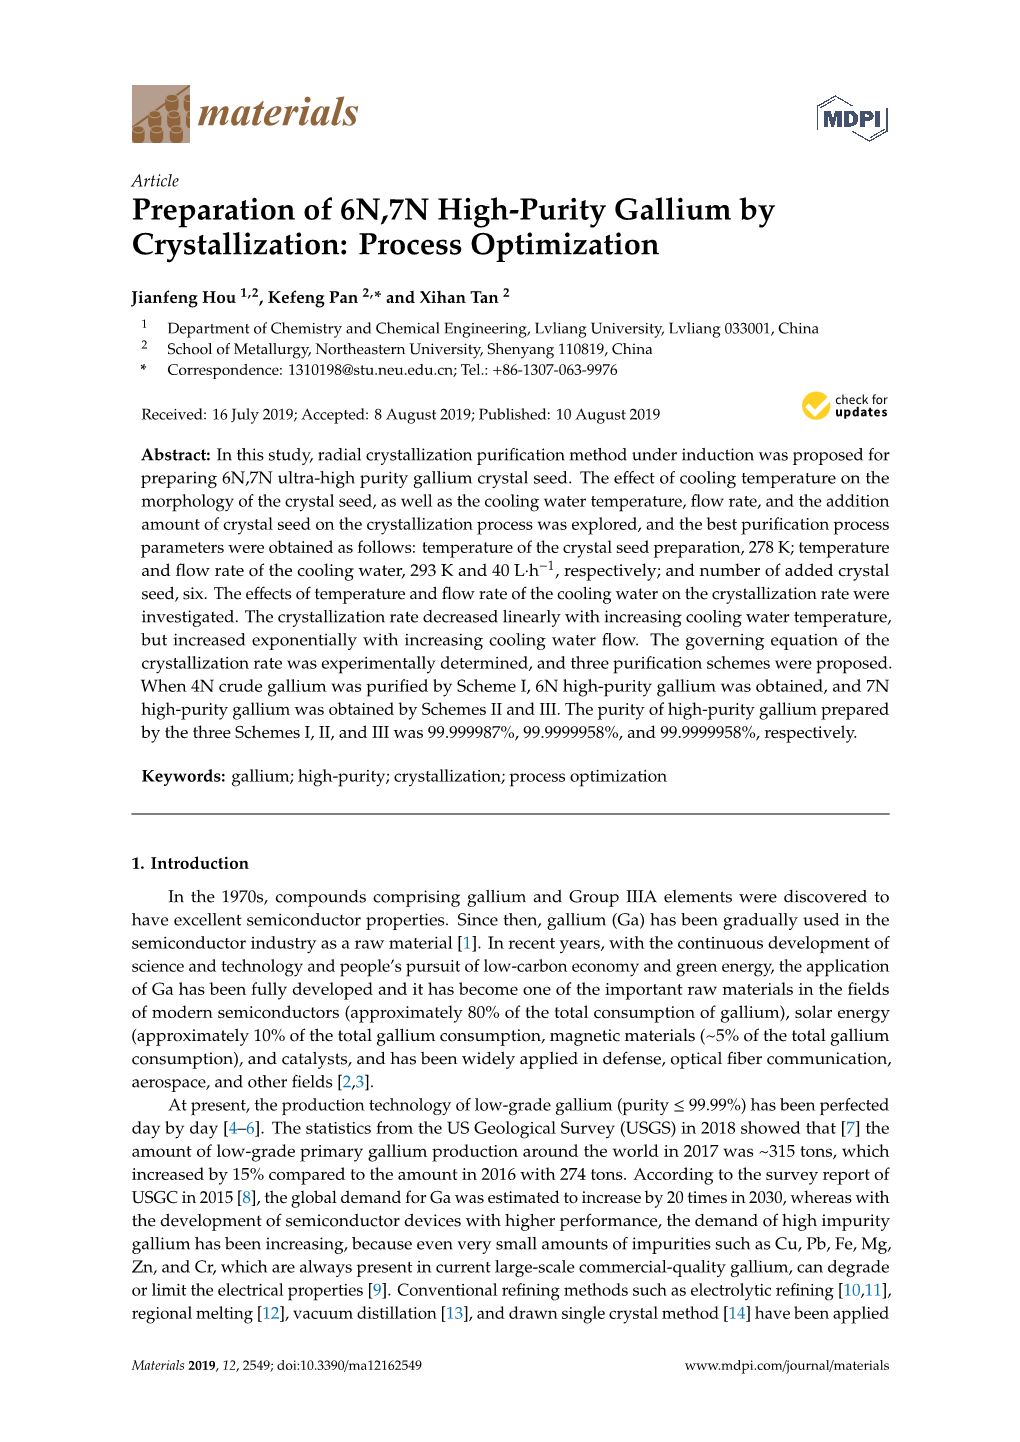 Preparation of 6N,7N High-Purity Gallium by Crystallization: Process Optimization